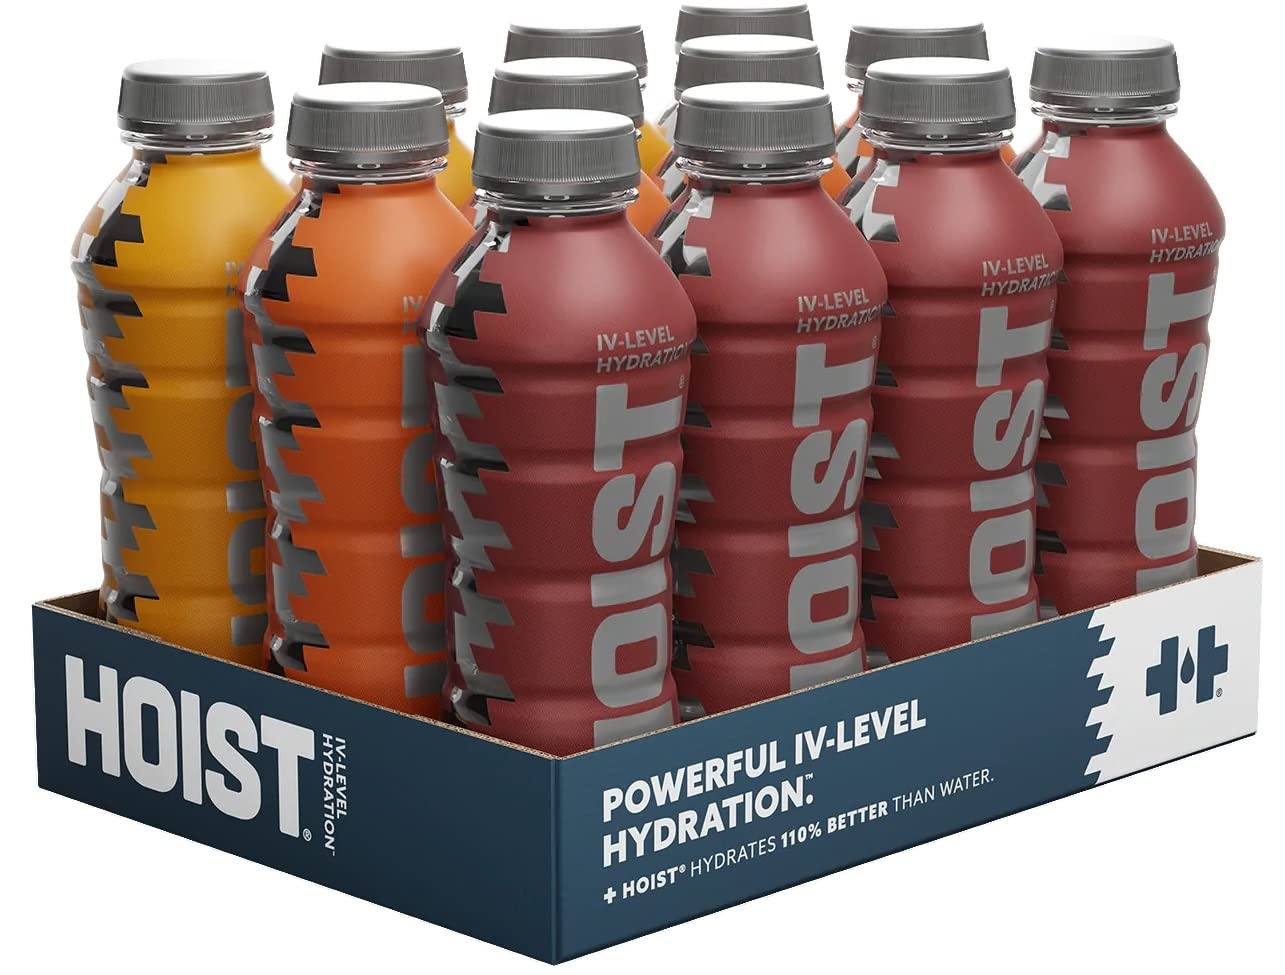 HOIST Premium Hydration Electrolyte Drink, Powerful IV-Level Hydration, Variety Pack, 16 Fl Oz (Pack of 12)